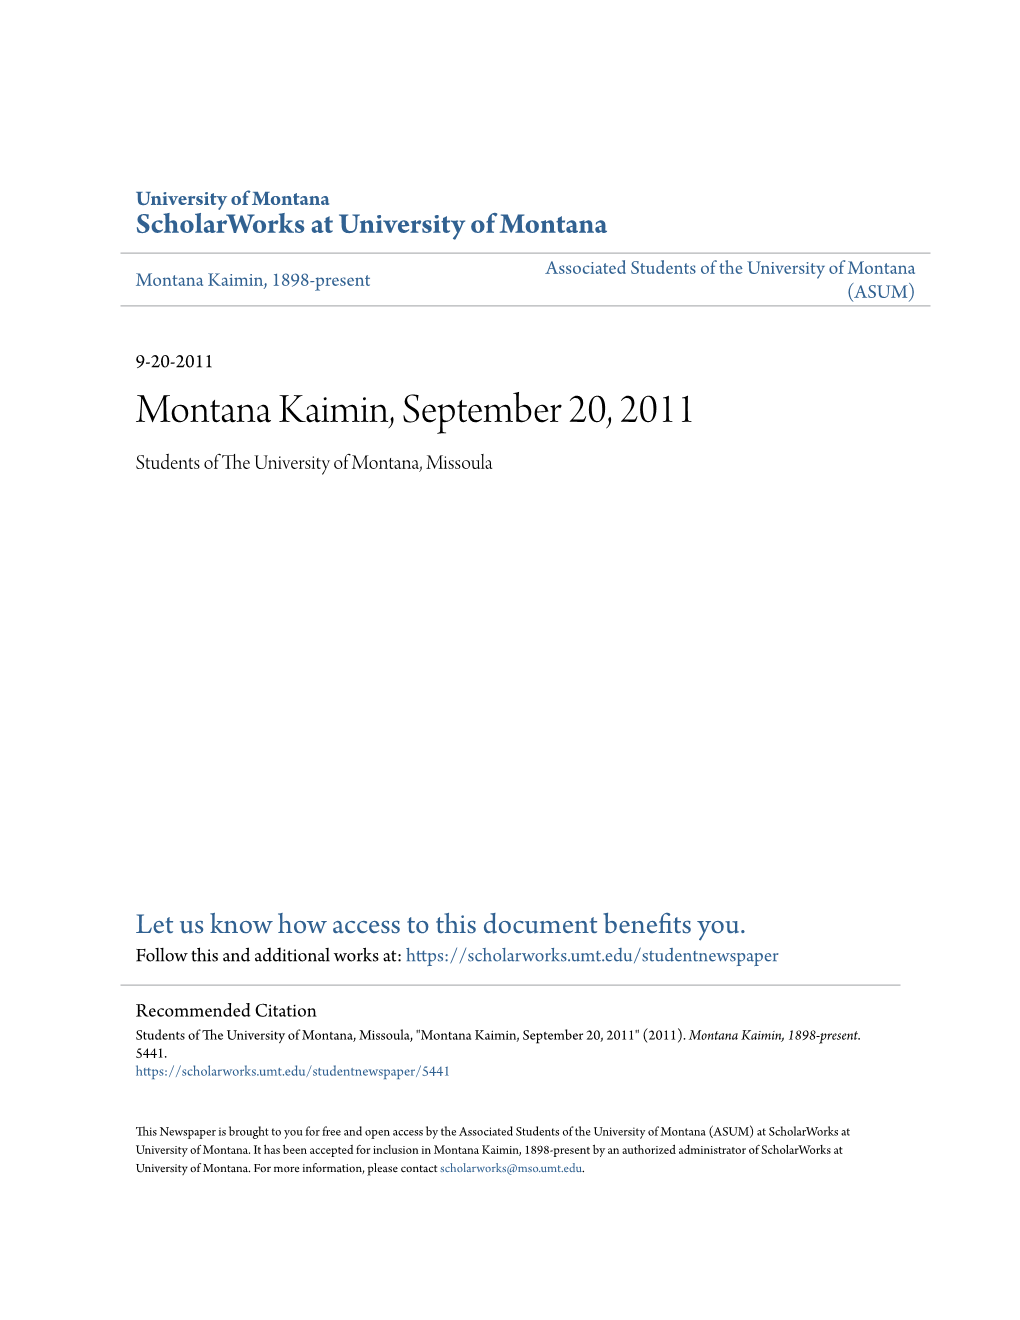 Montana Kaimin, September 20, 2011 Students of the Niu Versity of Montana, Missoula